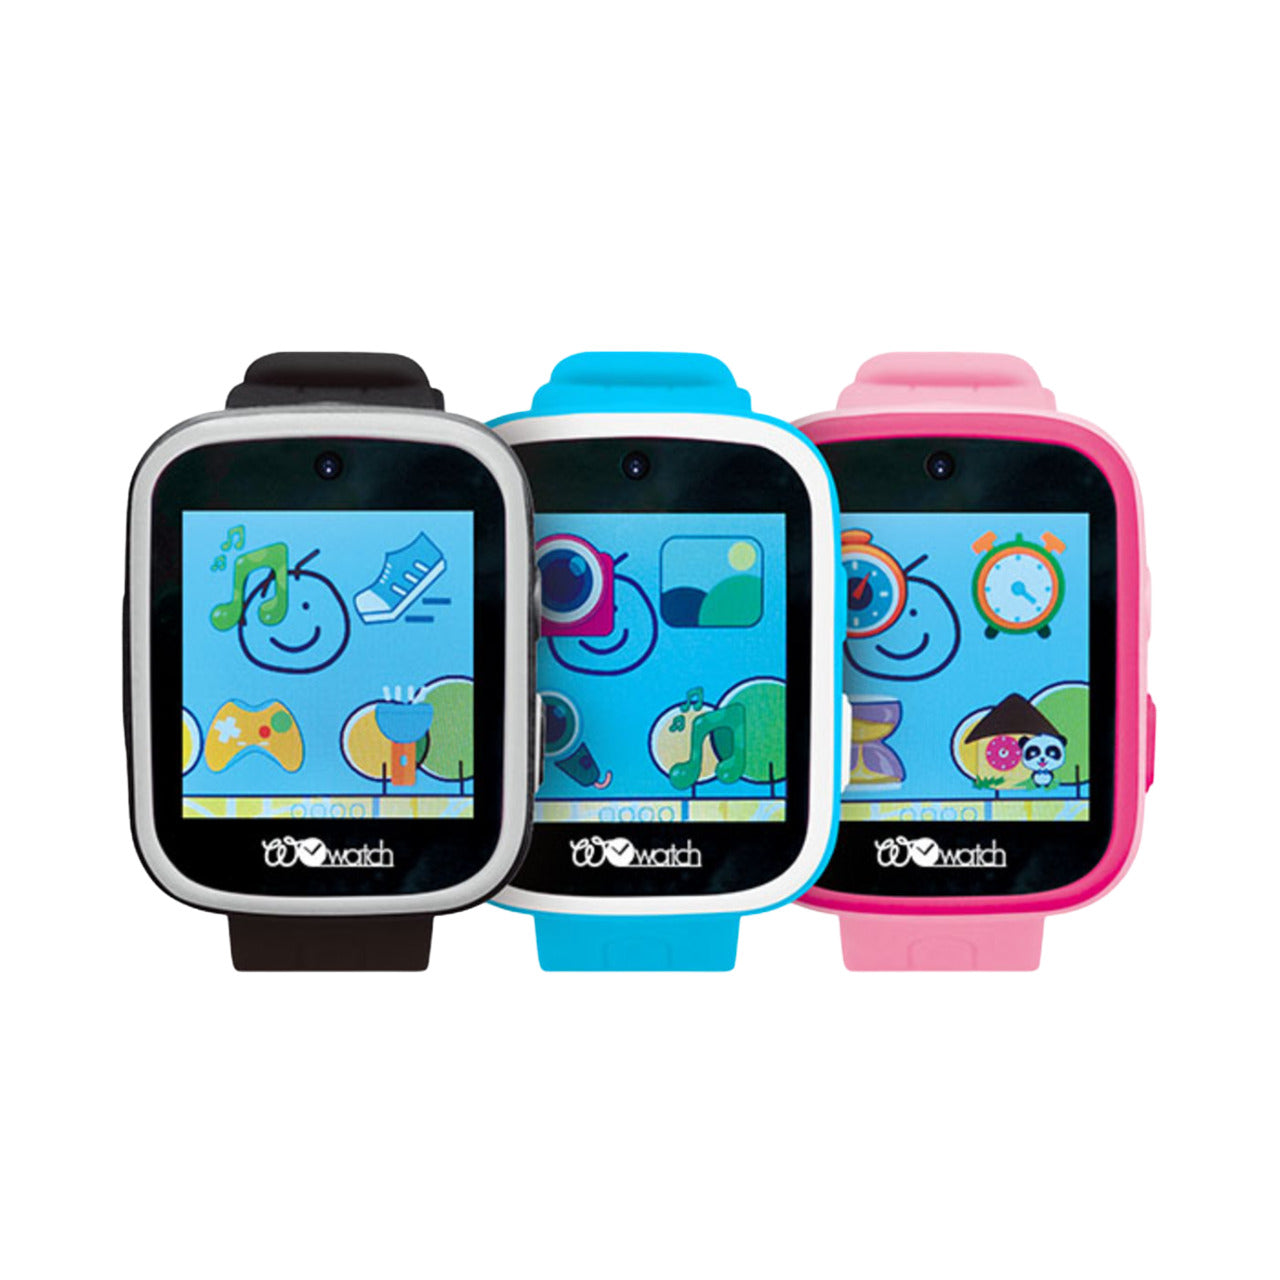 Kids Digital Smartwatch, Selfie Camera, 14 Functions, MP3, Games, Pink